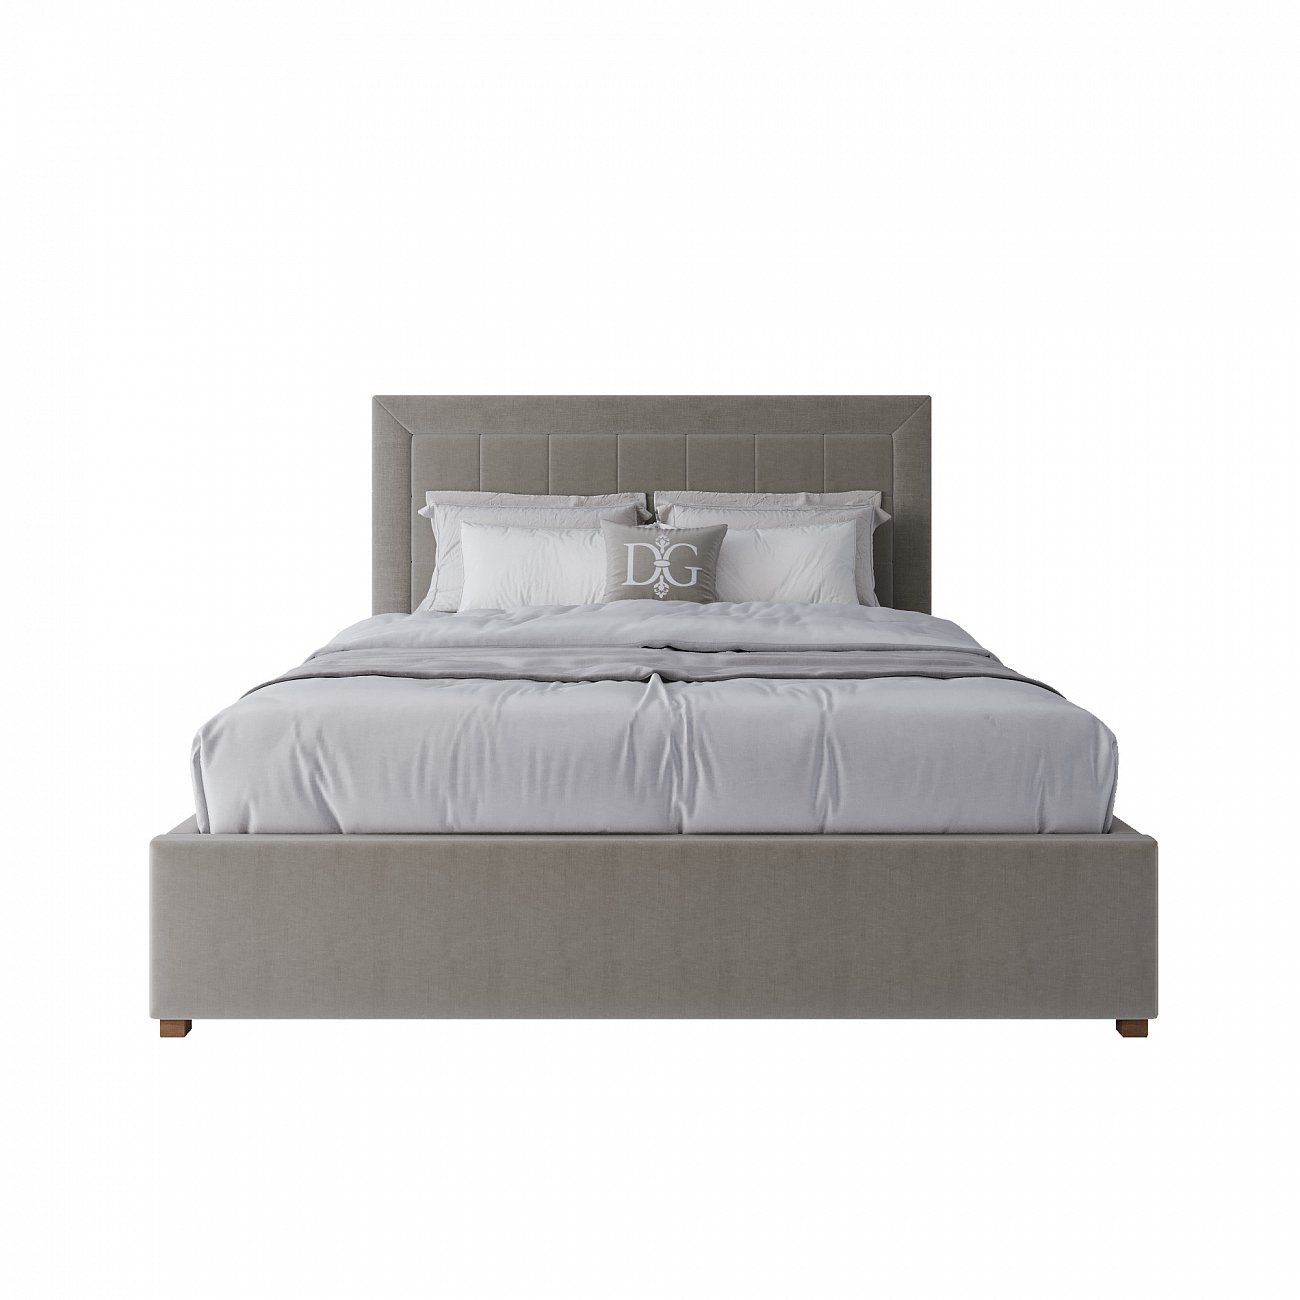 Double bed 160x200 brown-gray Elizabeth